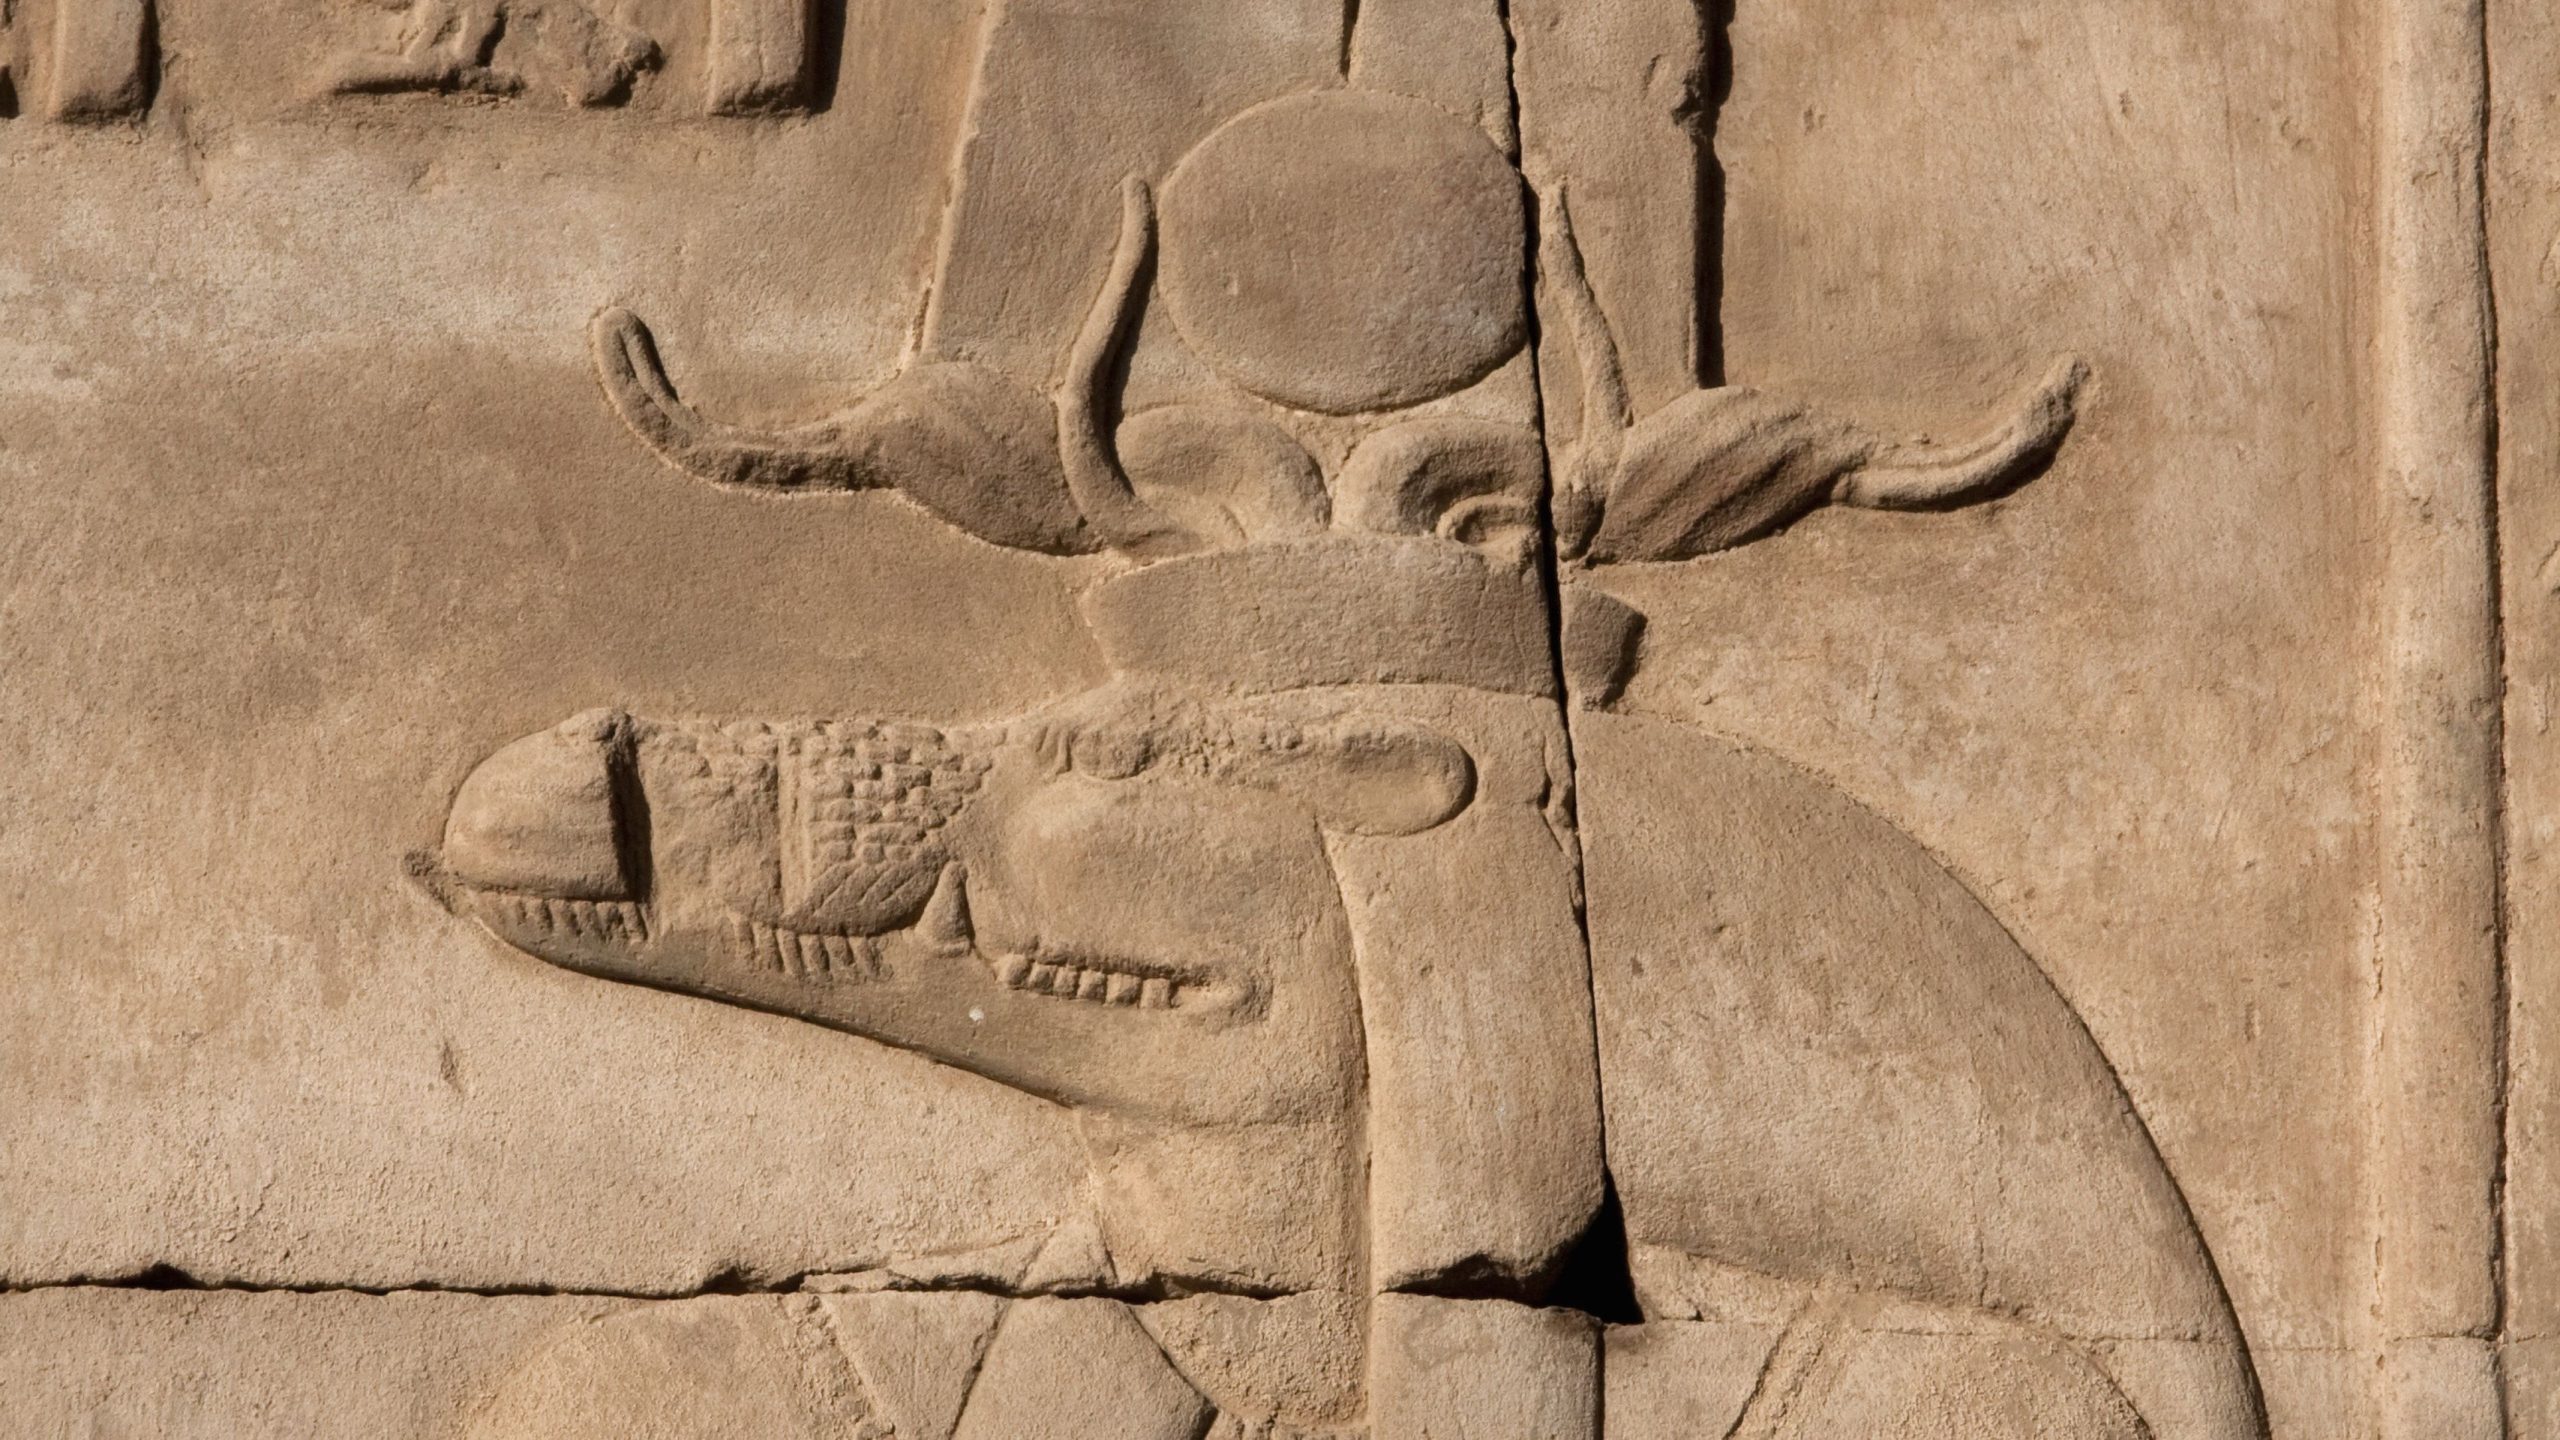 Sobek – Egyptian God of Crocodiles